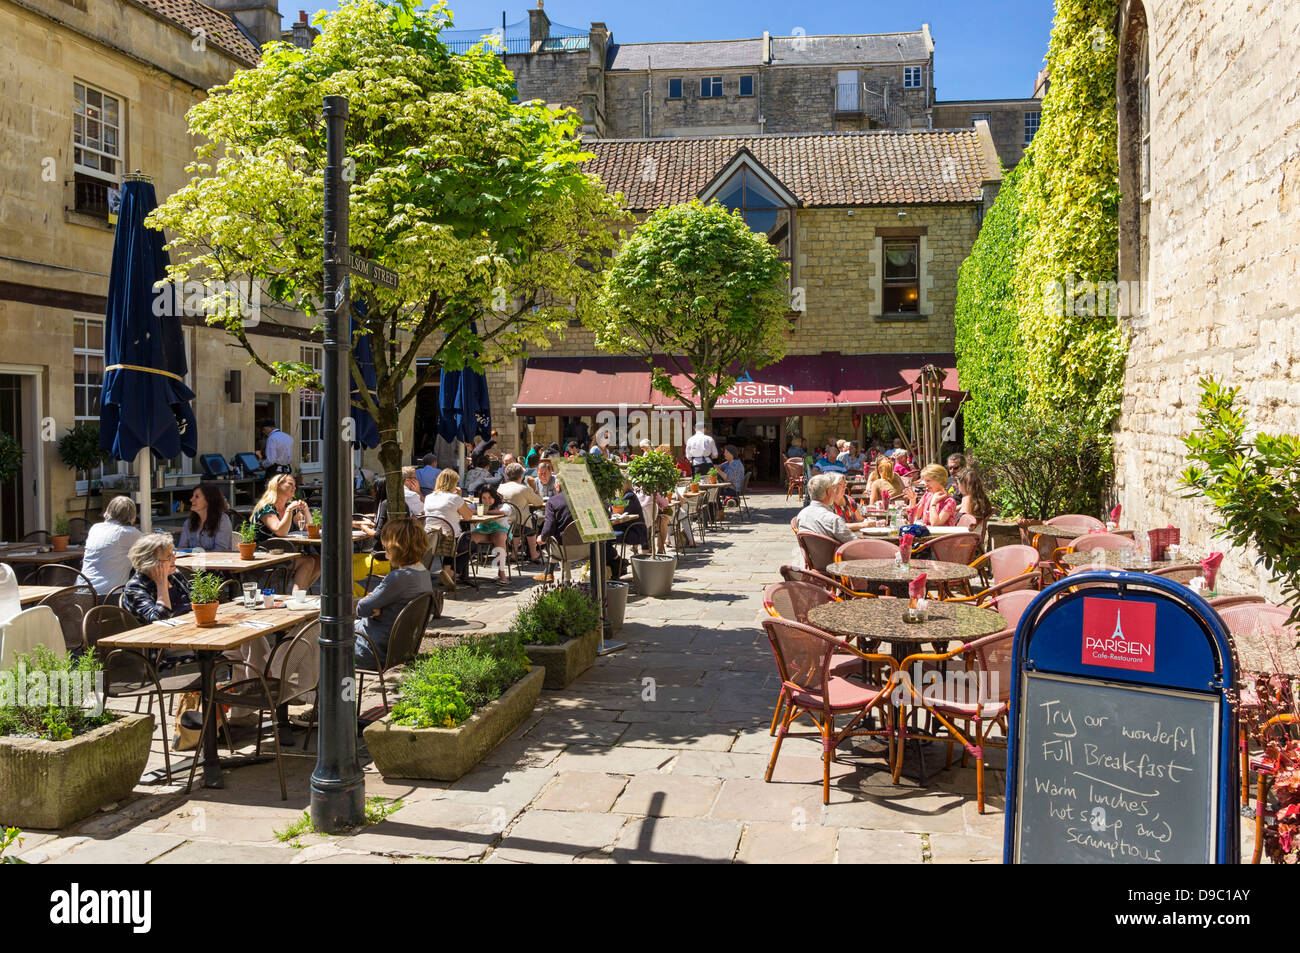 Pavement cafe / restaurant - Parisien in Bath, Somerset, UK Stock Photo